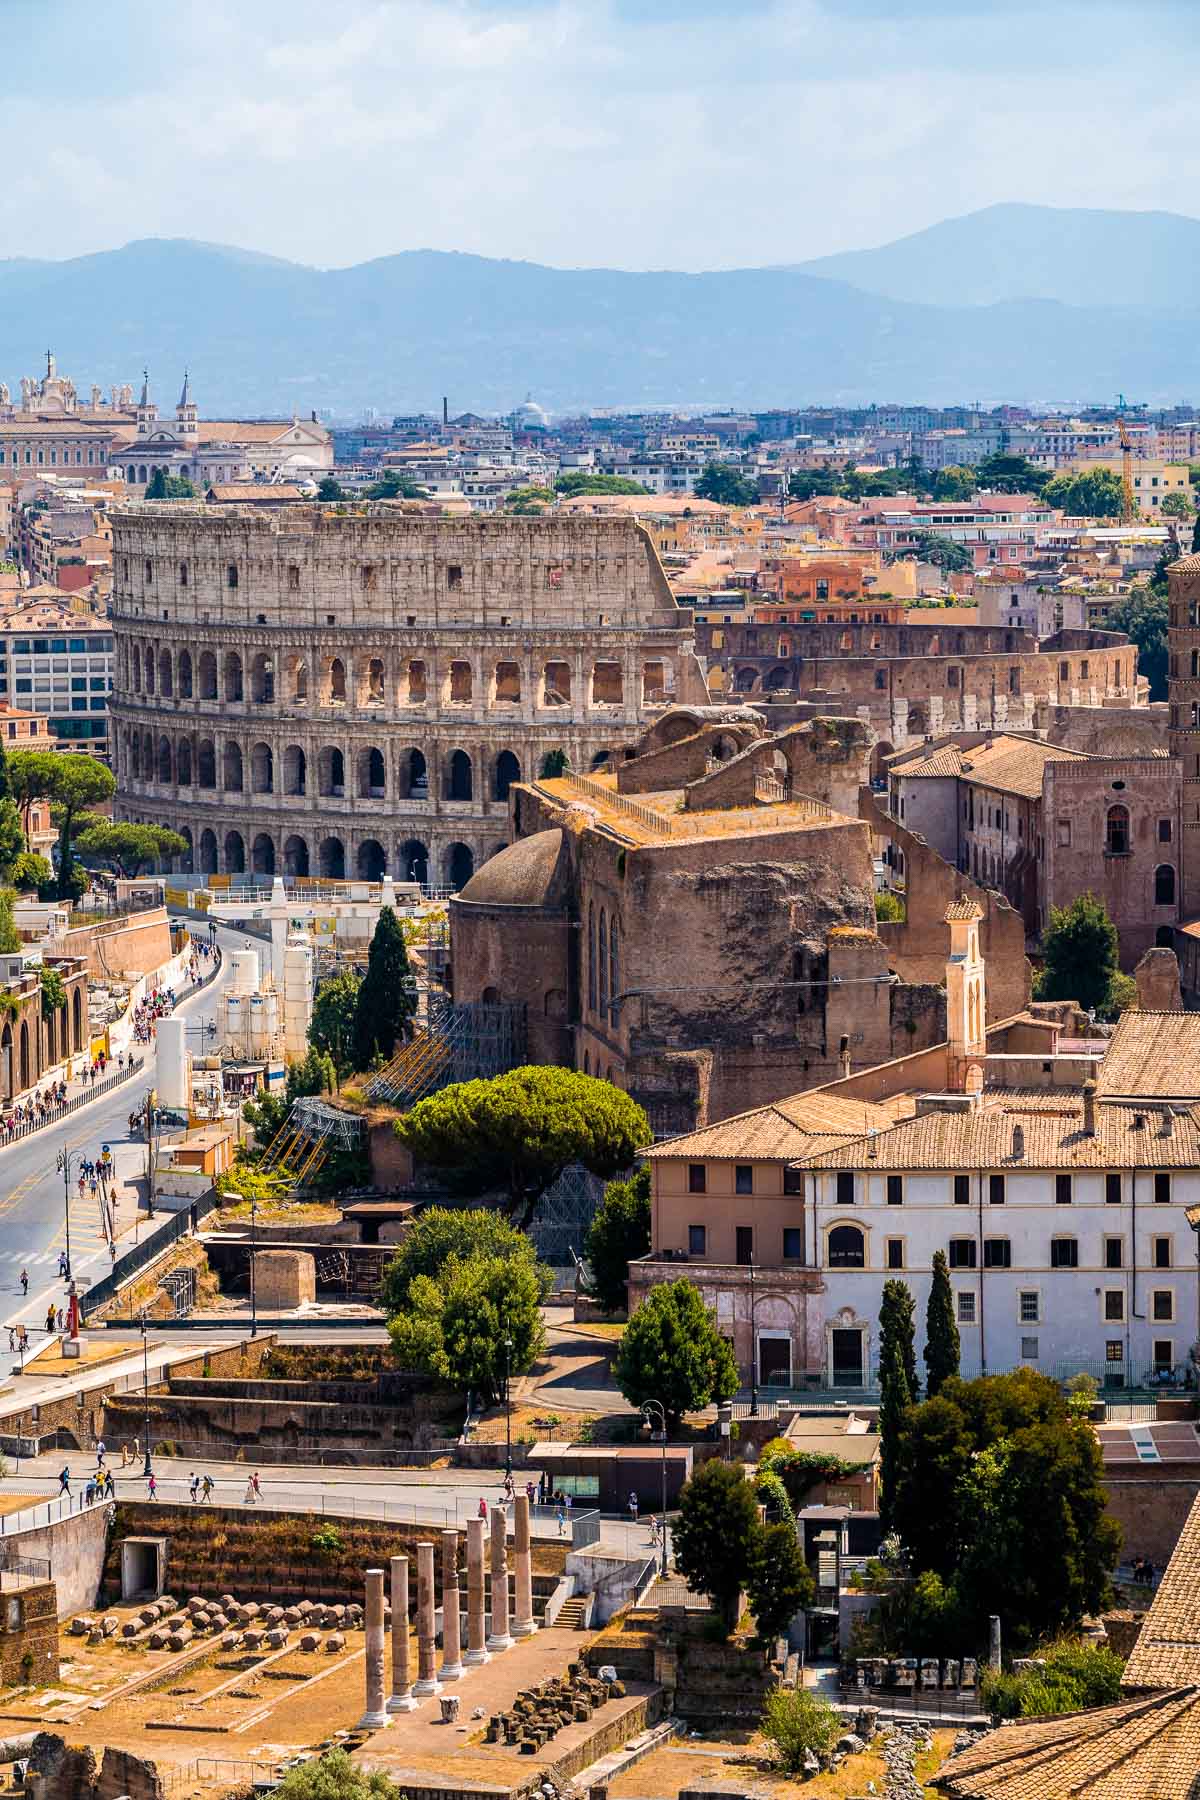 Panoramic view from the top of Altare della Patria, Rome